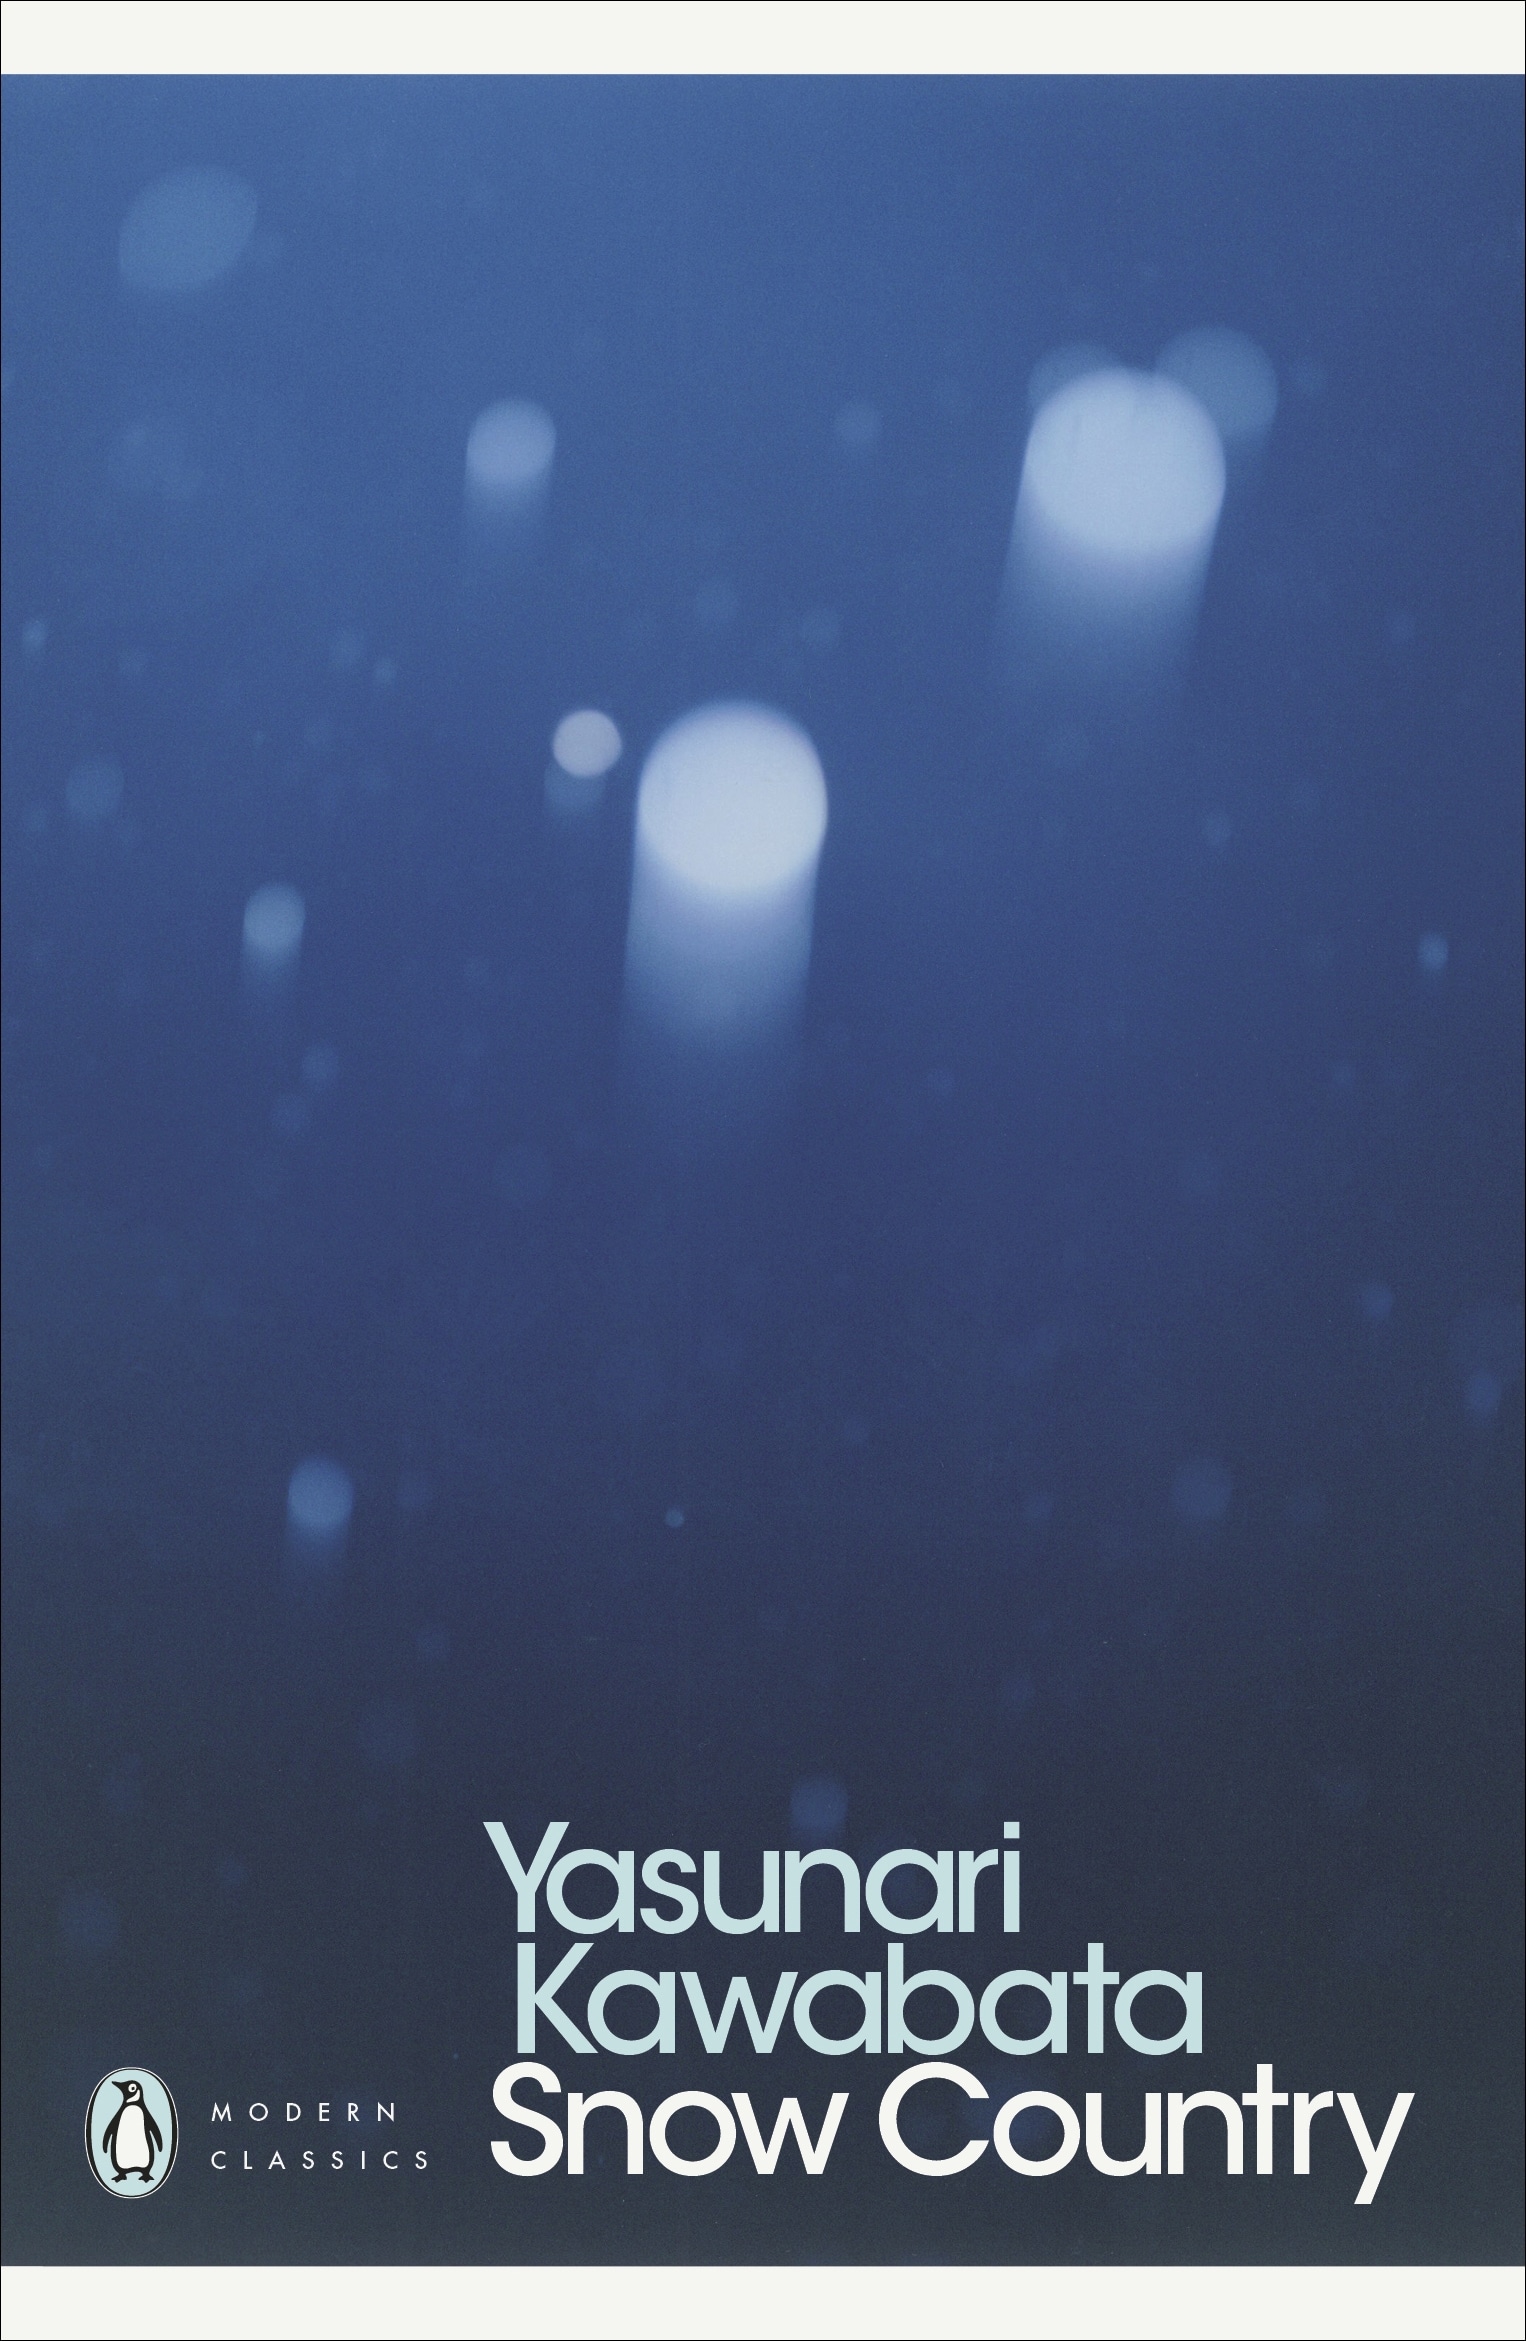 Book “Snow Country” by Yasunari Kawabata